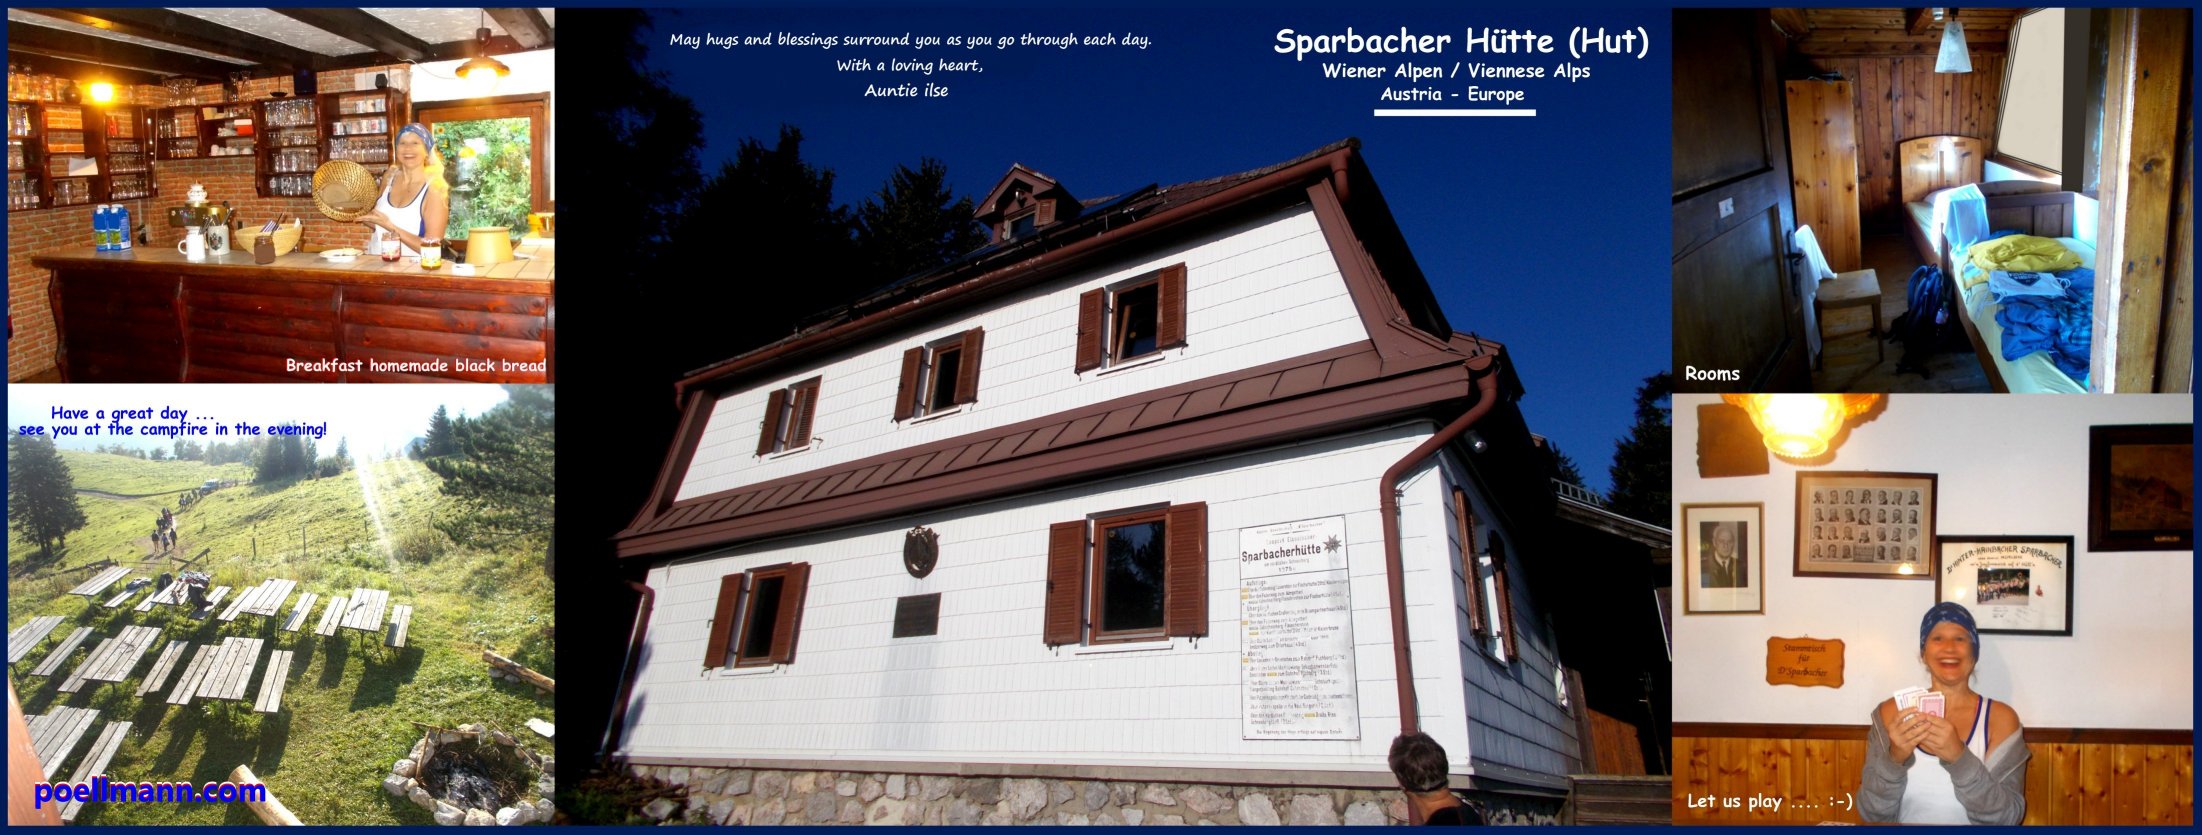  Pöllmann, Sparbacher Hütte, Schneeberg